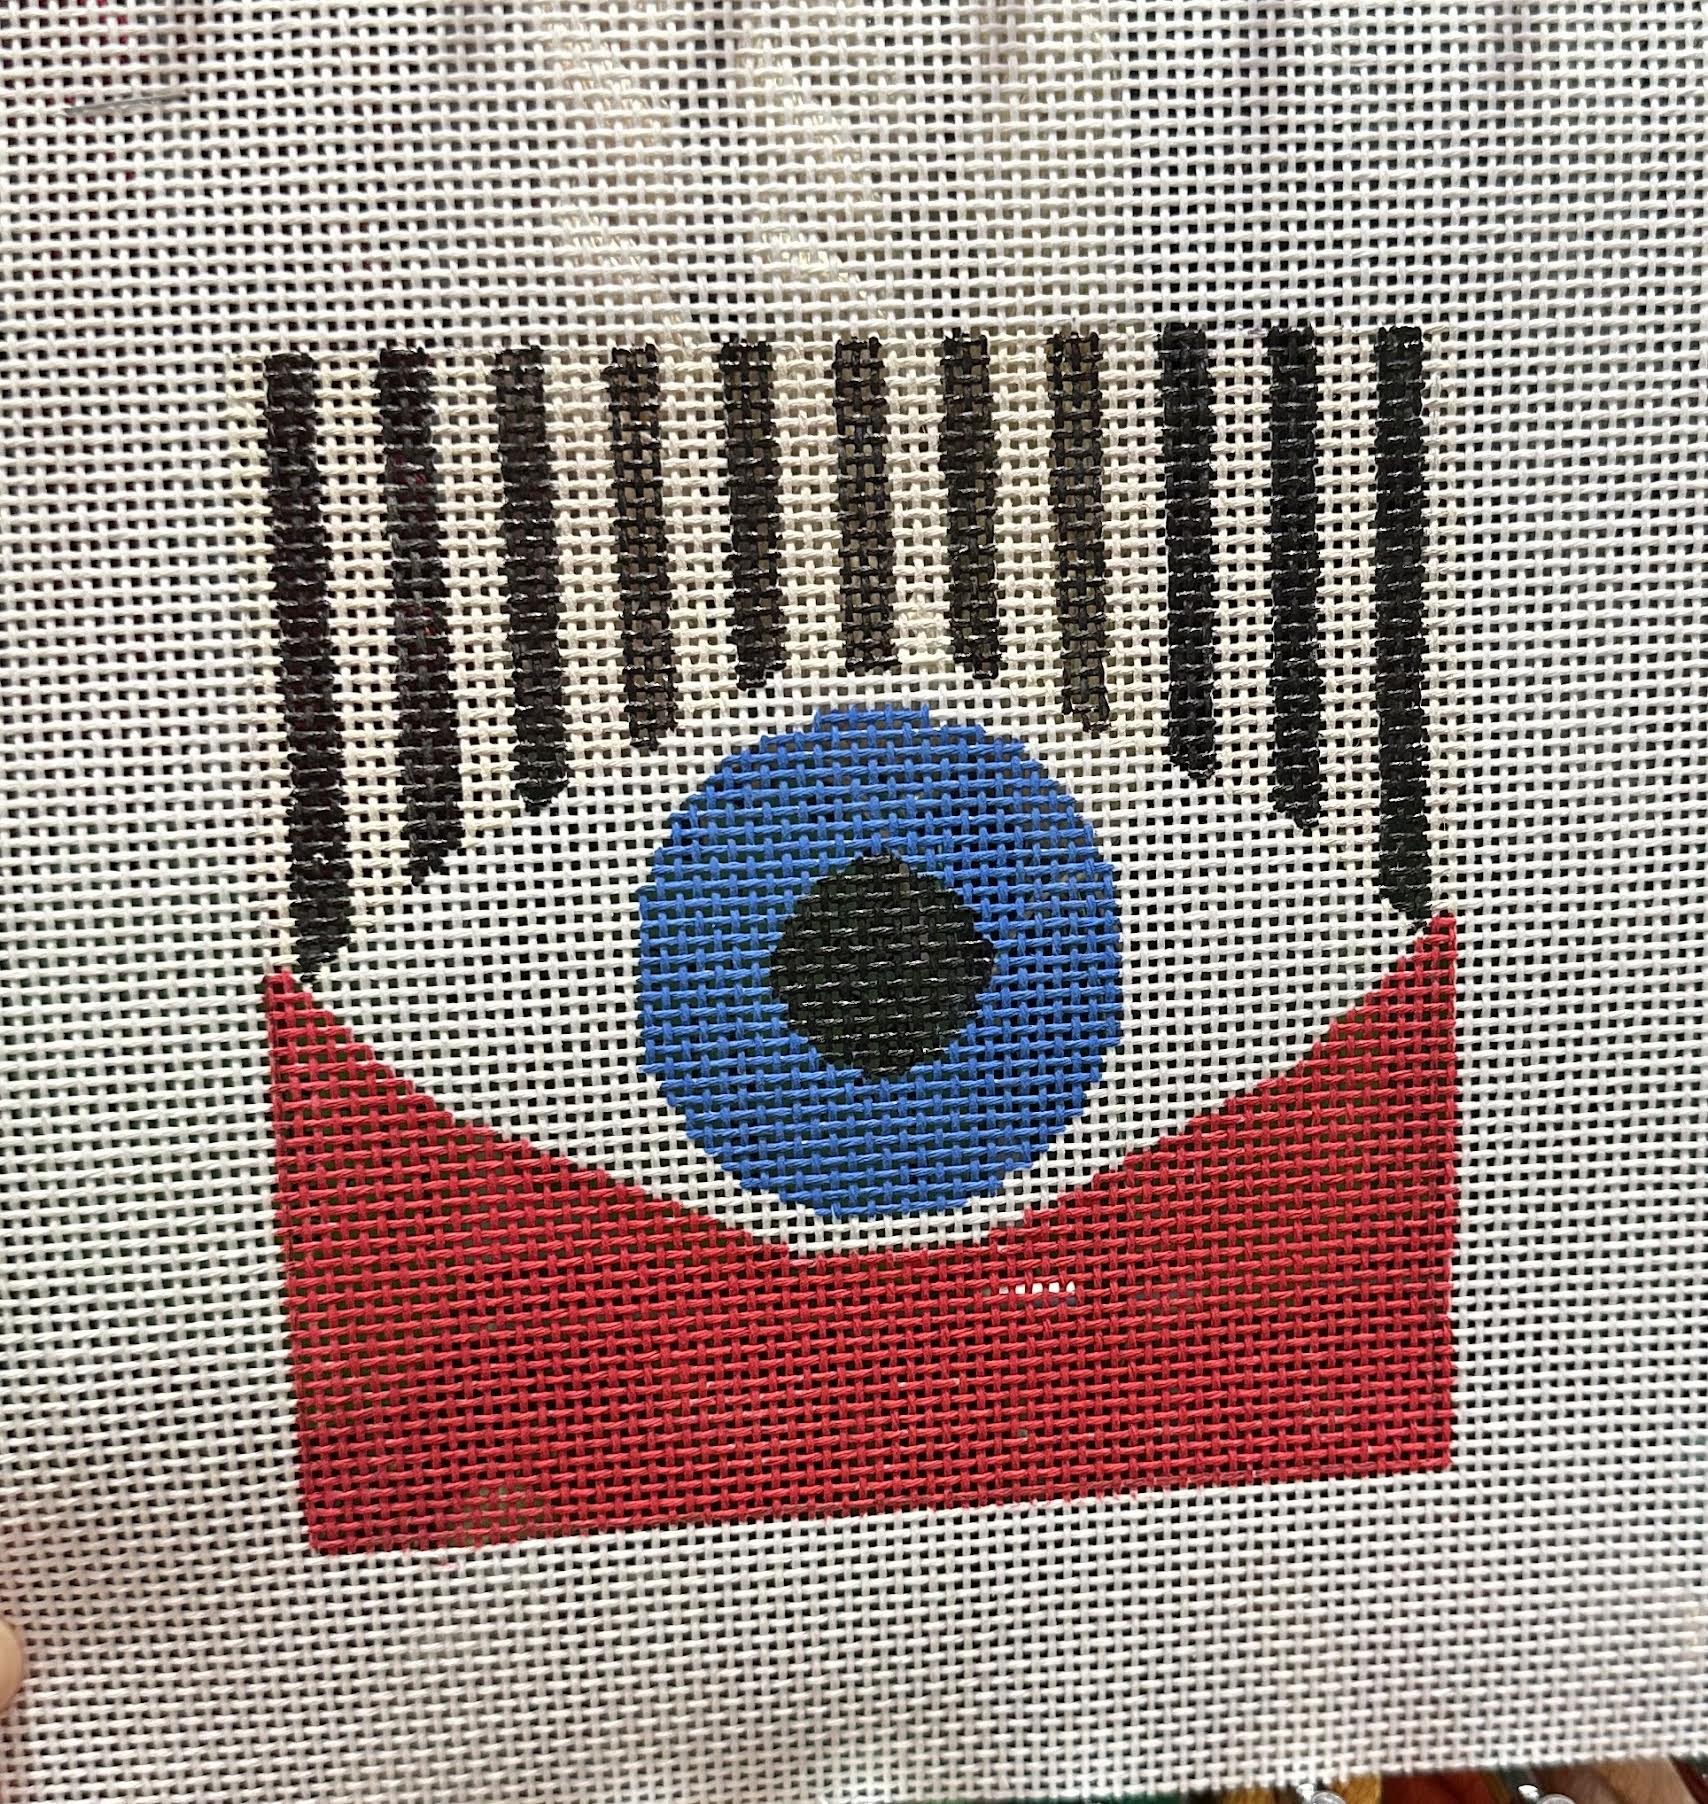 Stitch by Stitch Beginner Canvas - Blue Eye